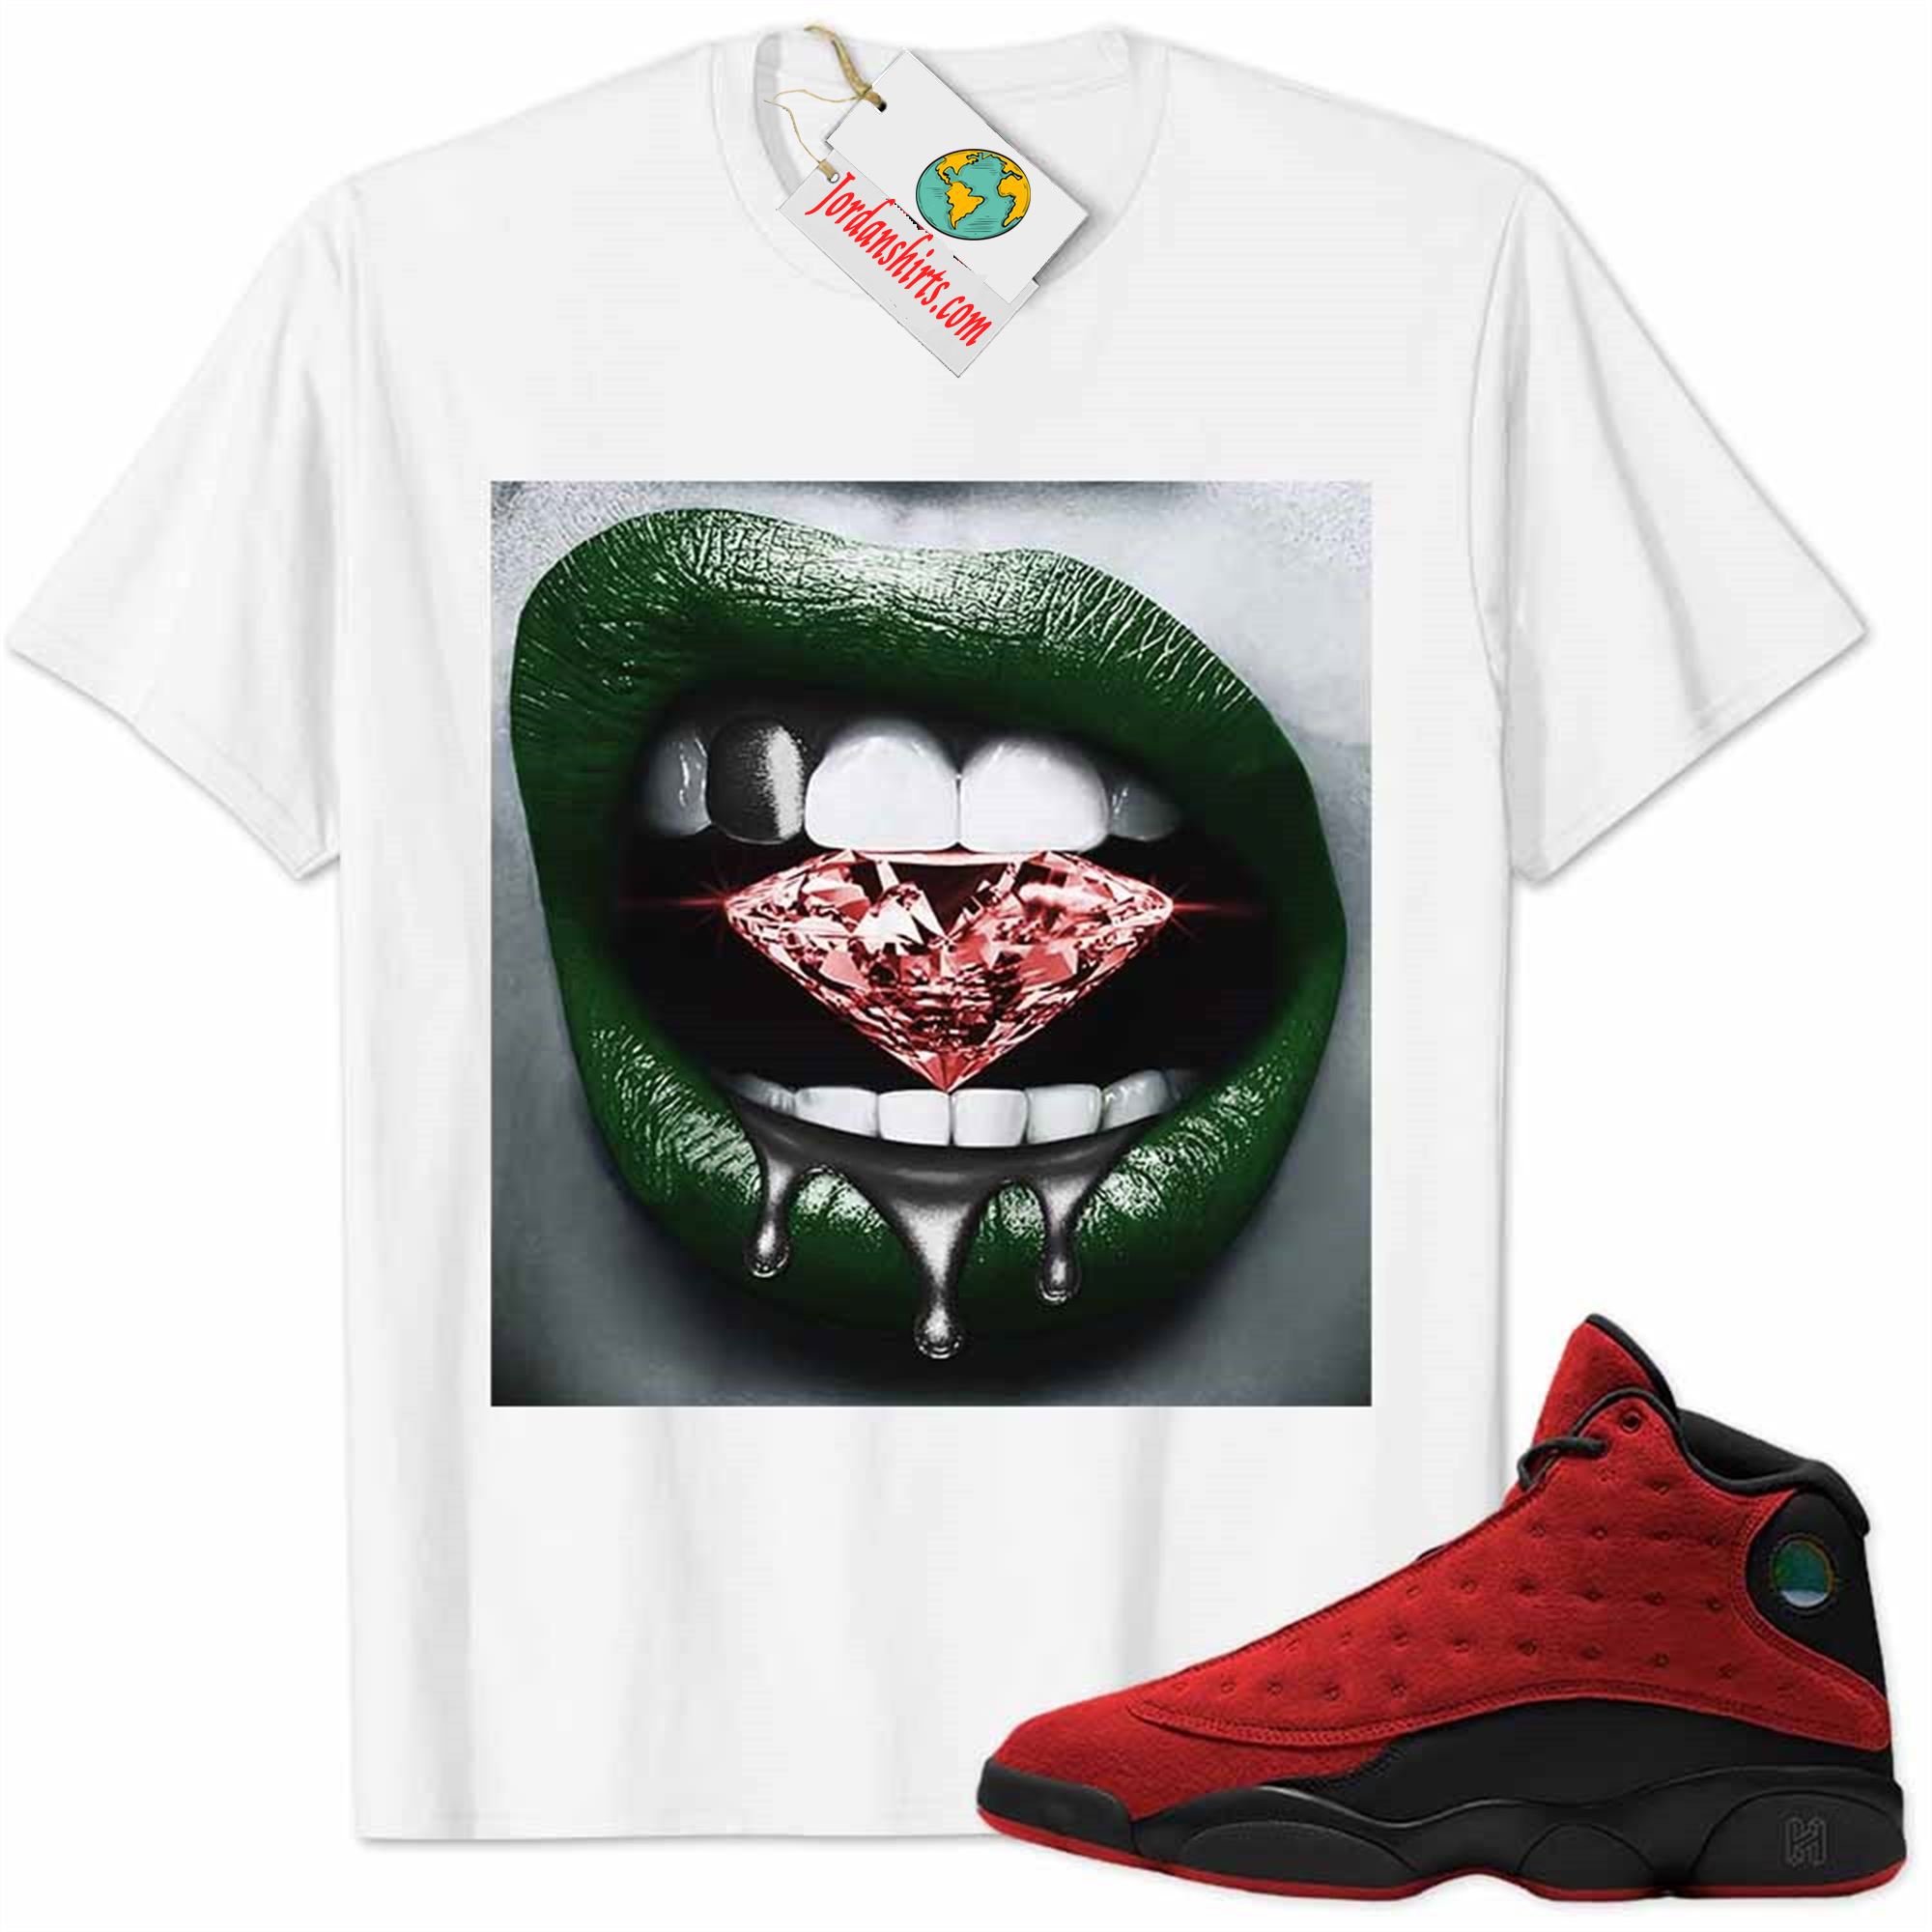 Jordan 13 Shirt, Jordan 13 Reverse Bred Shirt Sexy Lip Bite Diamond Dripping White Full Size Up To 5xl